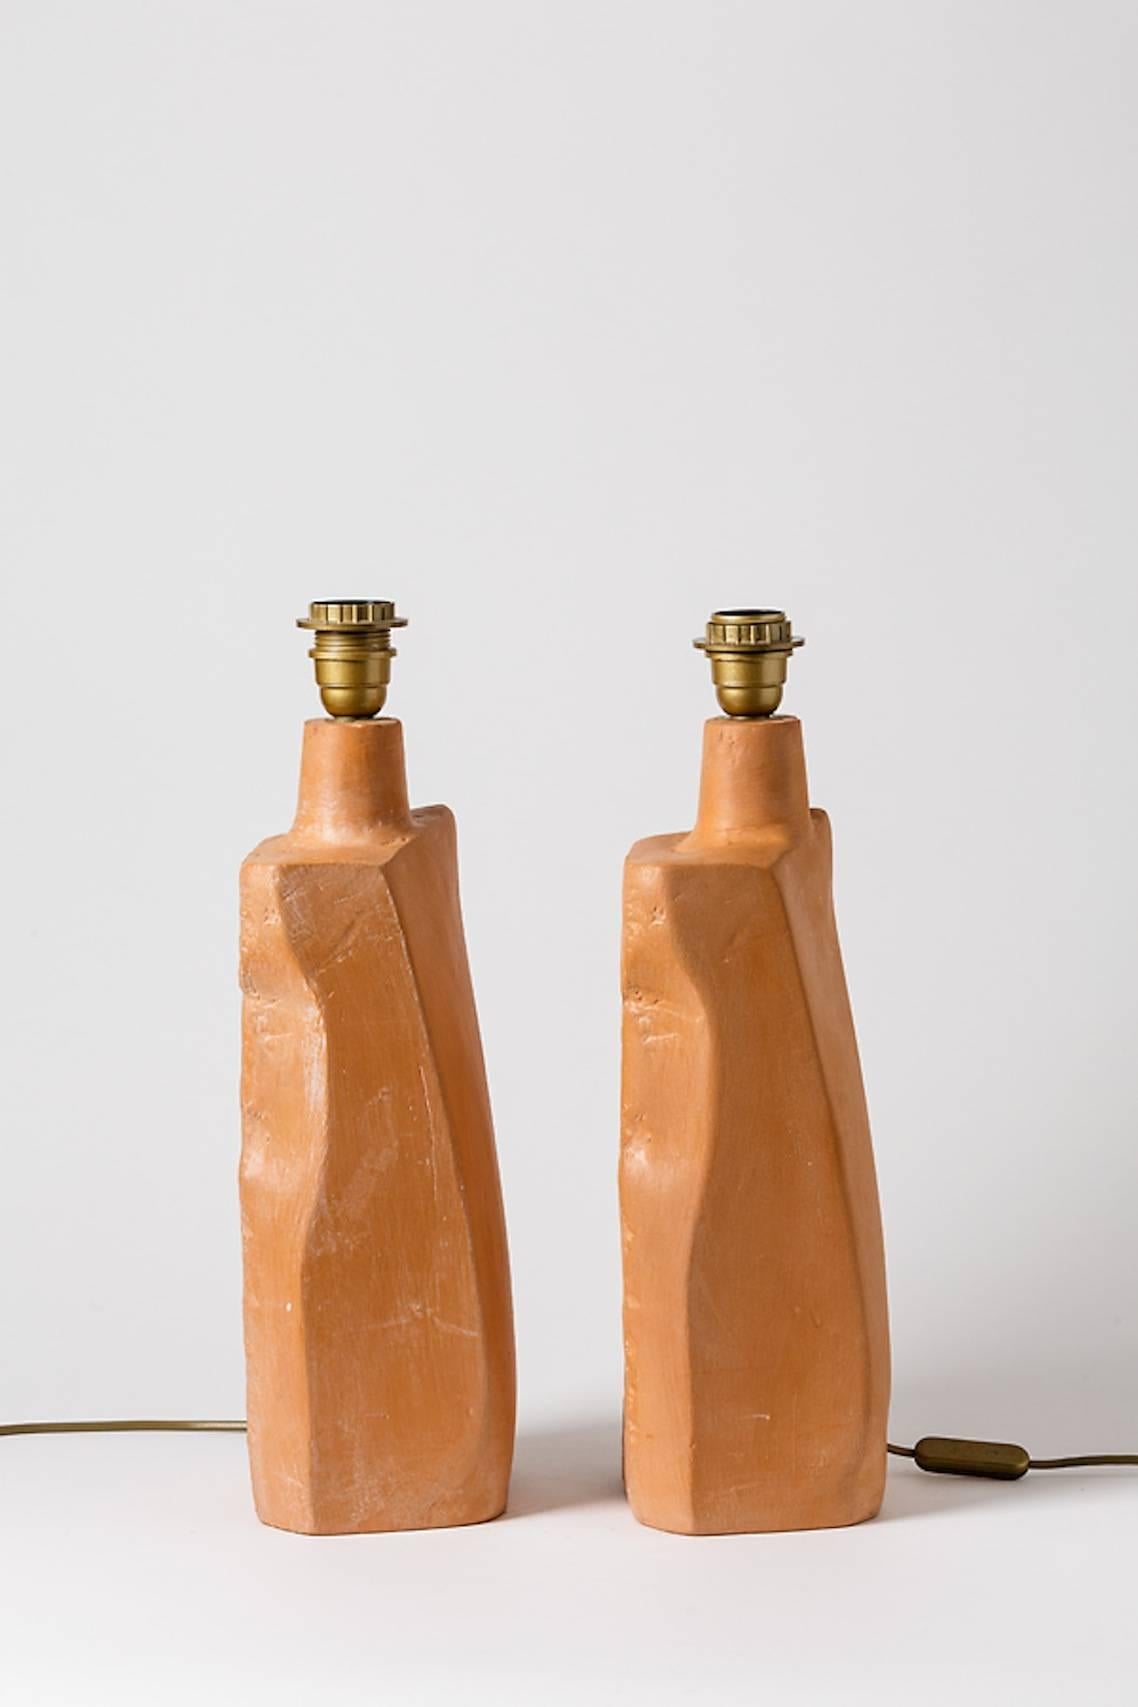 French Elegant Pair of Ceramic Lamps by Tim Orr, circa 1970-1980